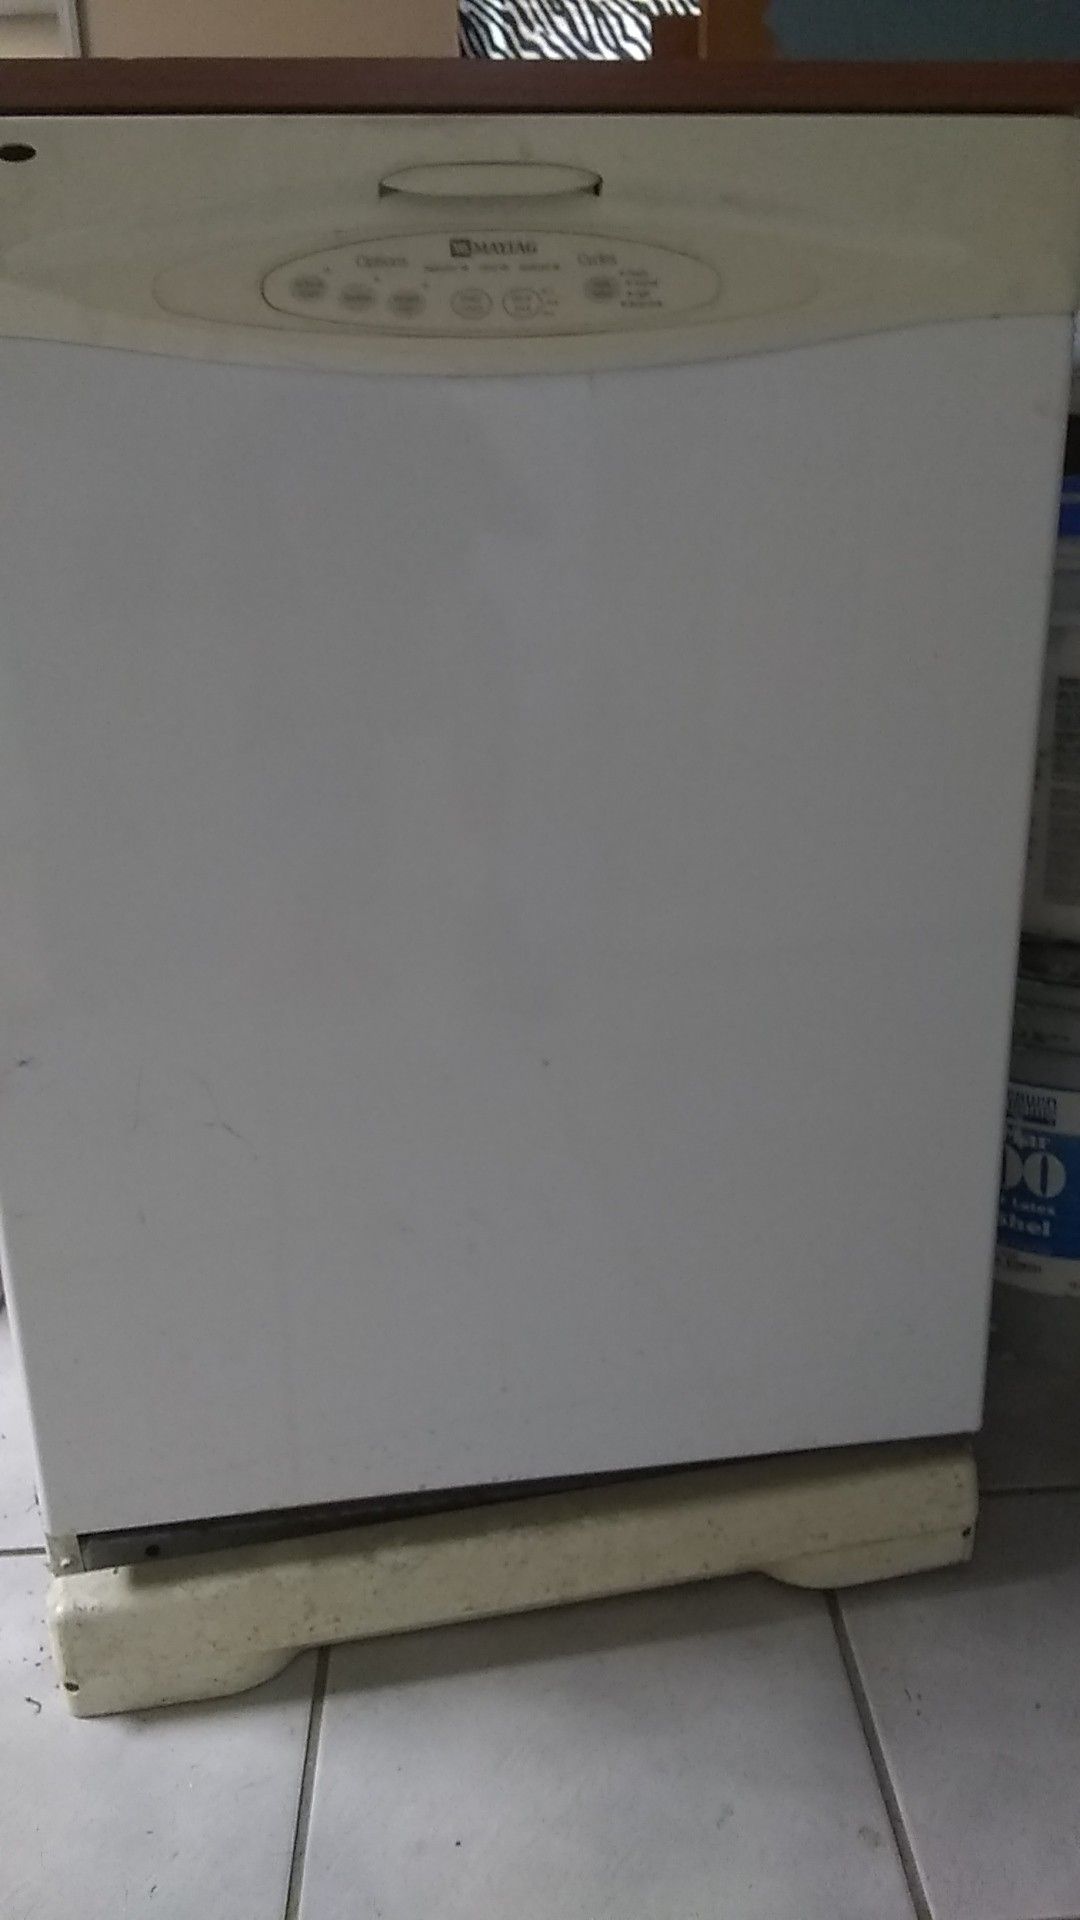 Maytag portable dishwasher $145